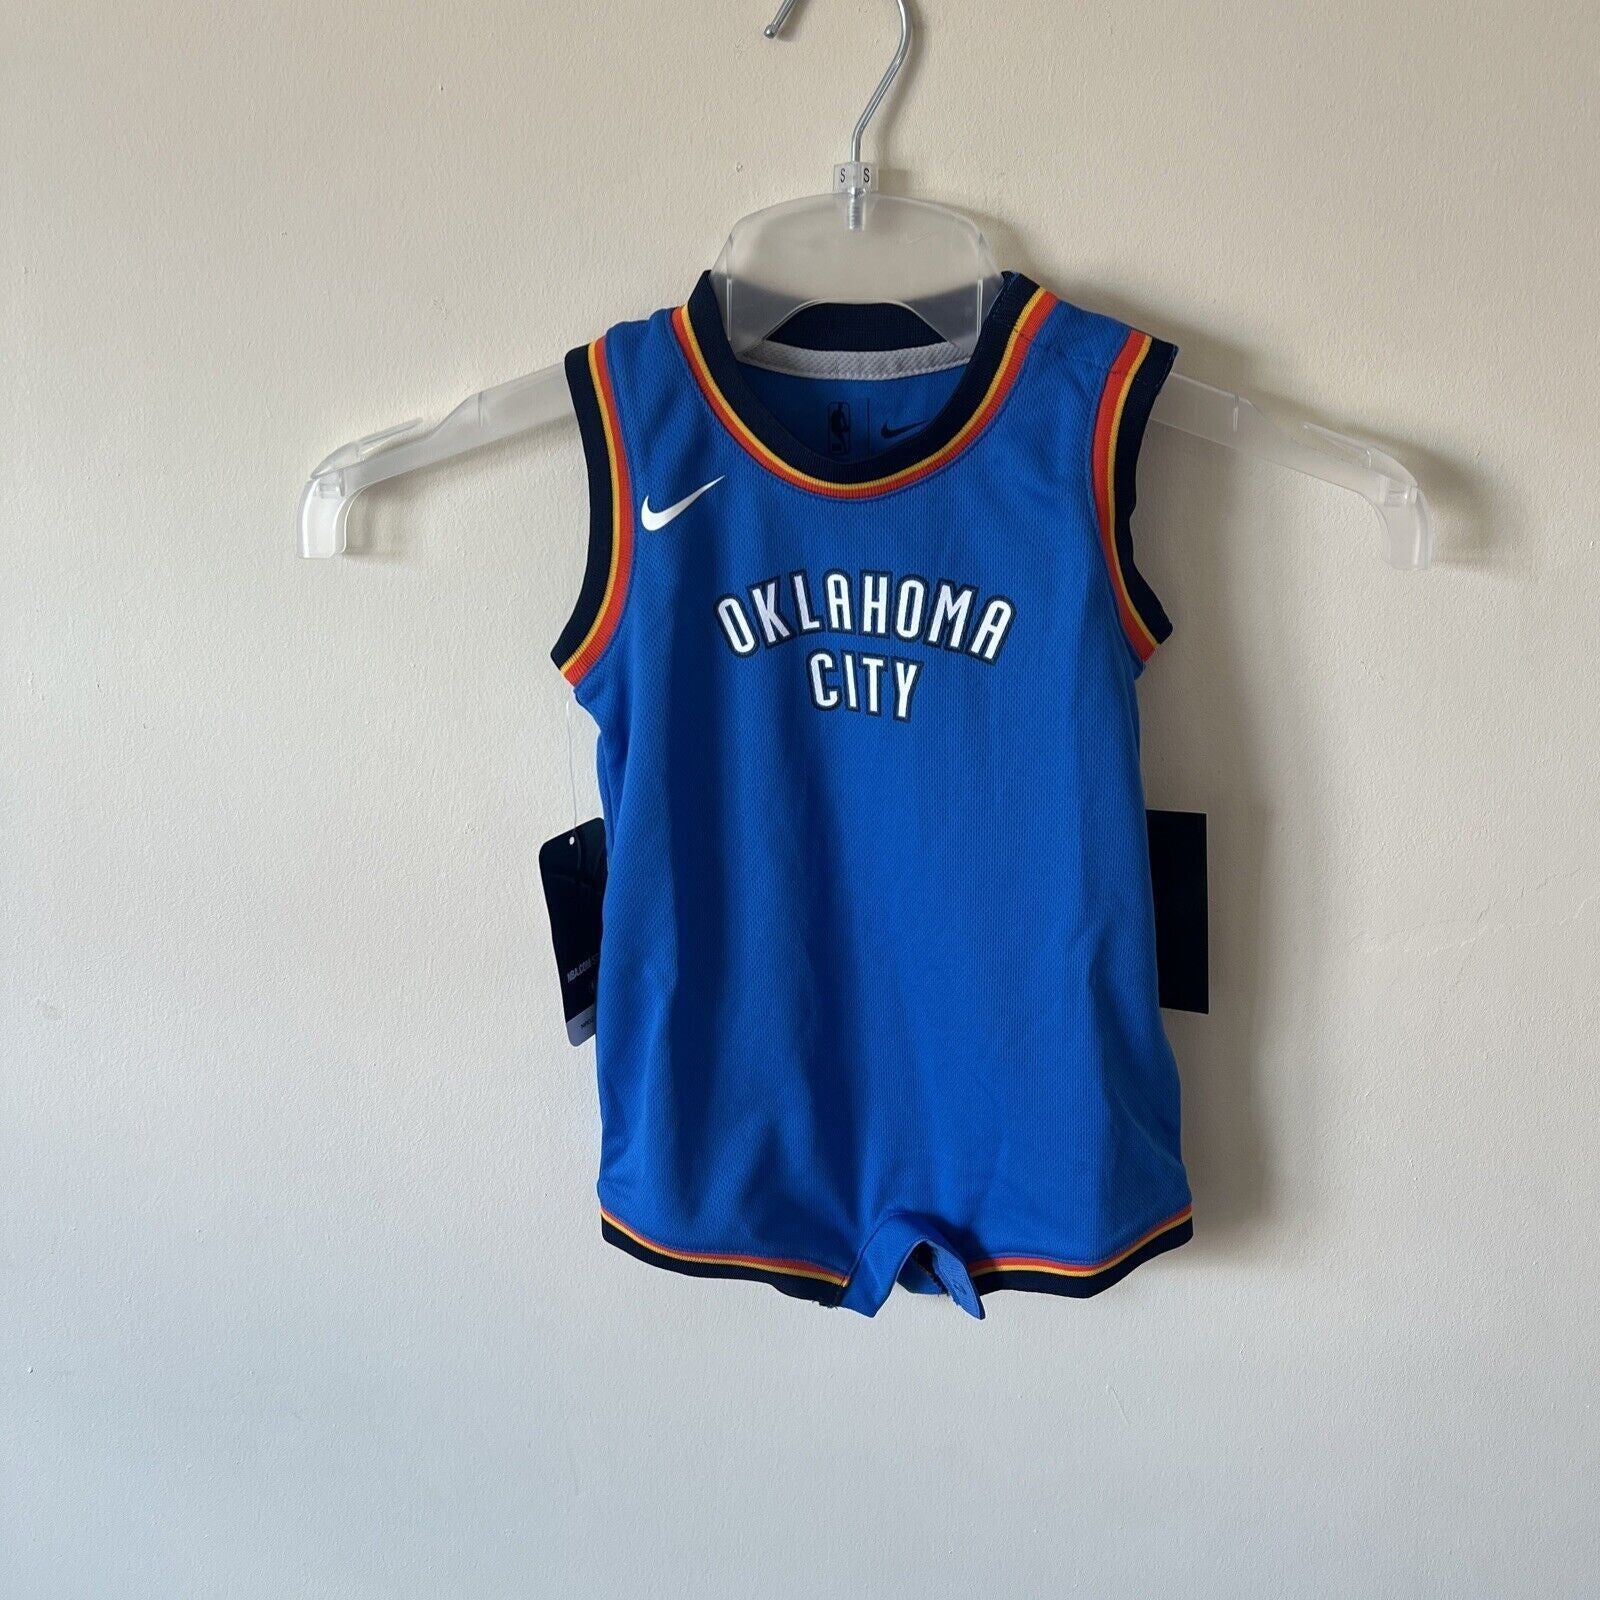 Nike NBA Oklahoma City Baby Grow One Piece Jersey 12M